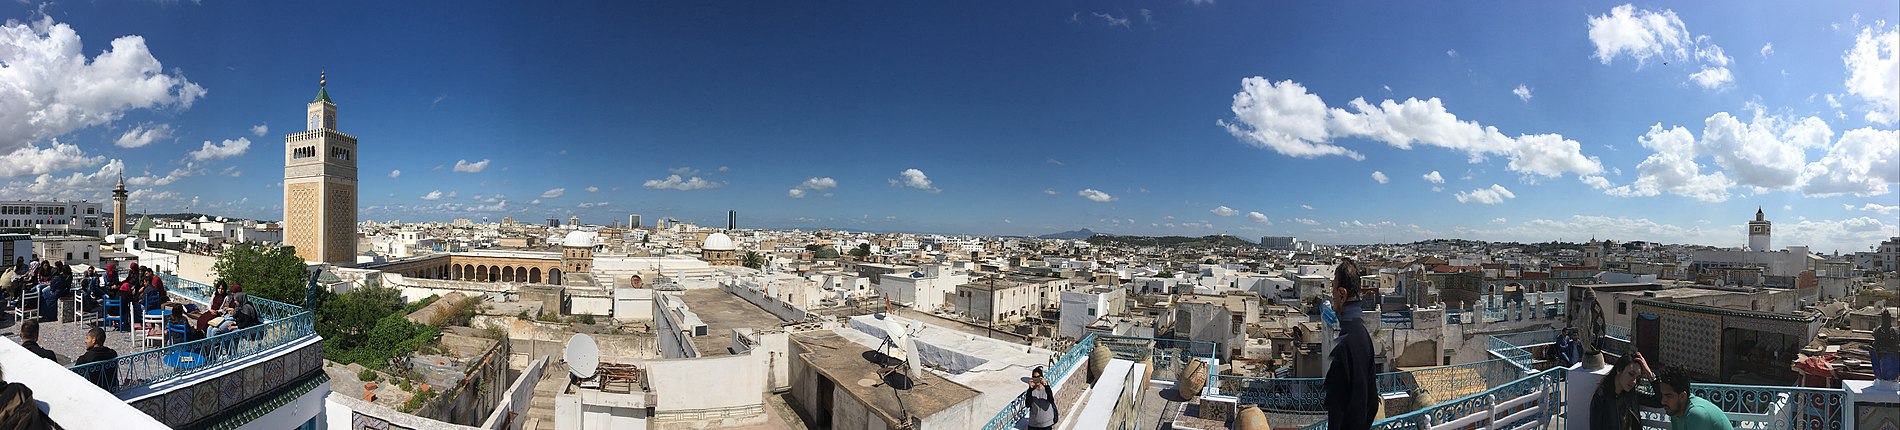 Panorama medina of Tunis- photo panoramique de la médina de Tunis- صورة بانورامية لمدينة تونس العتيقة.jpg